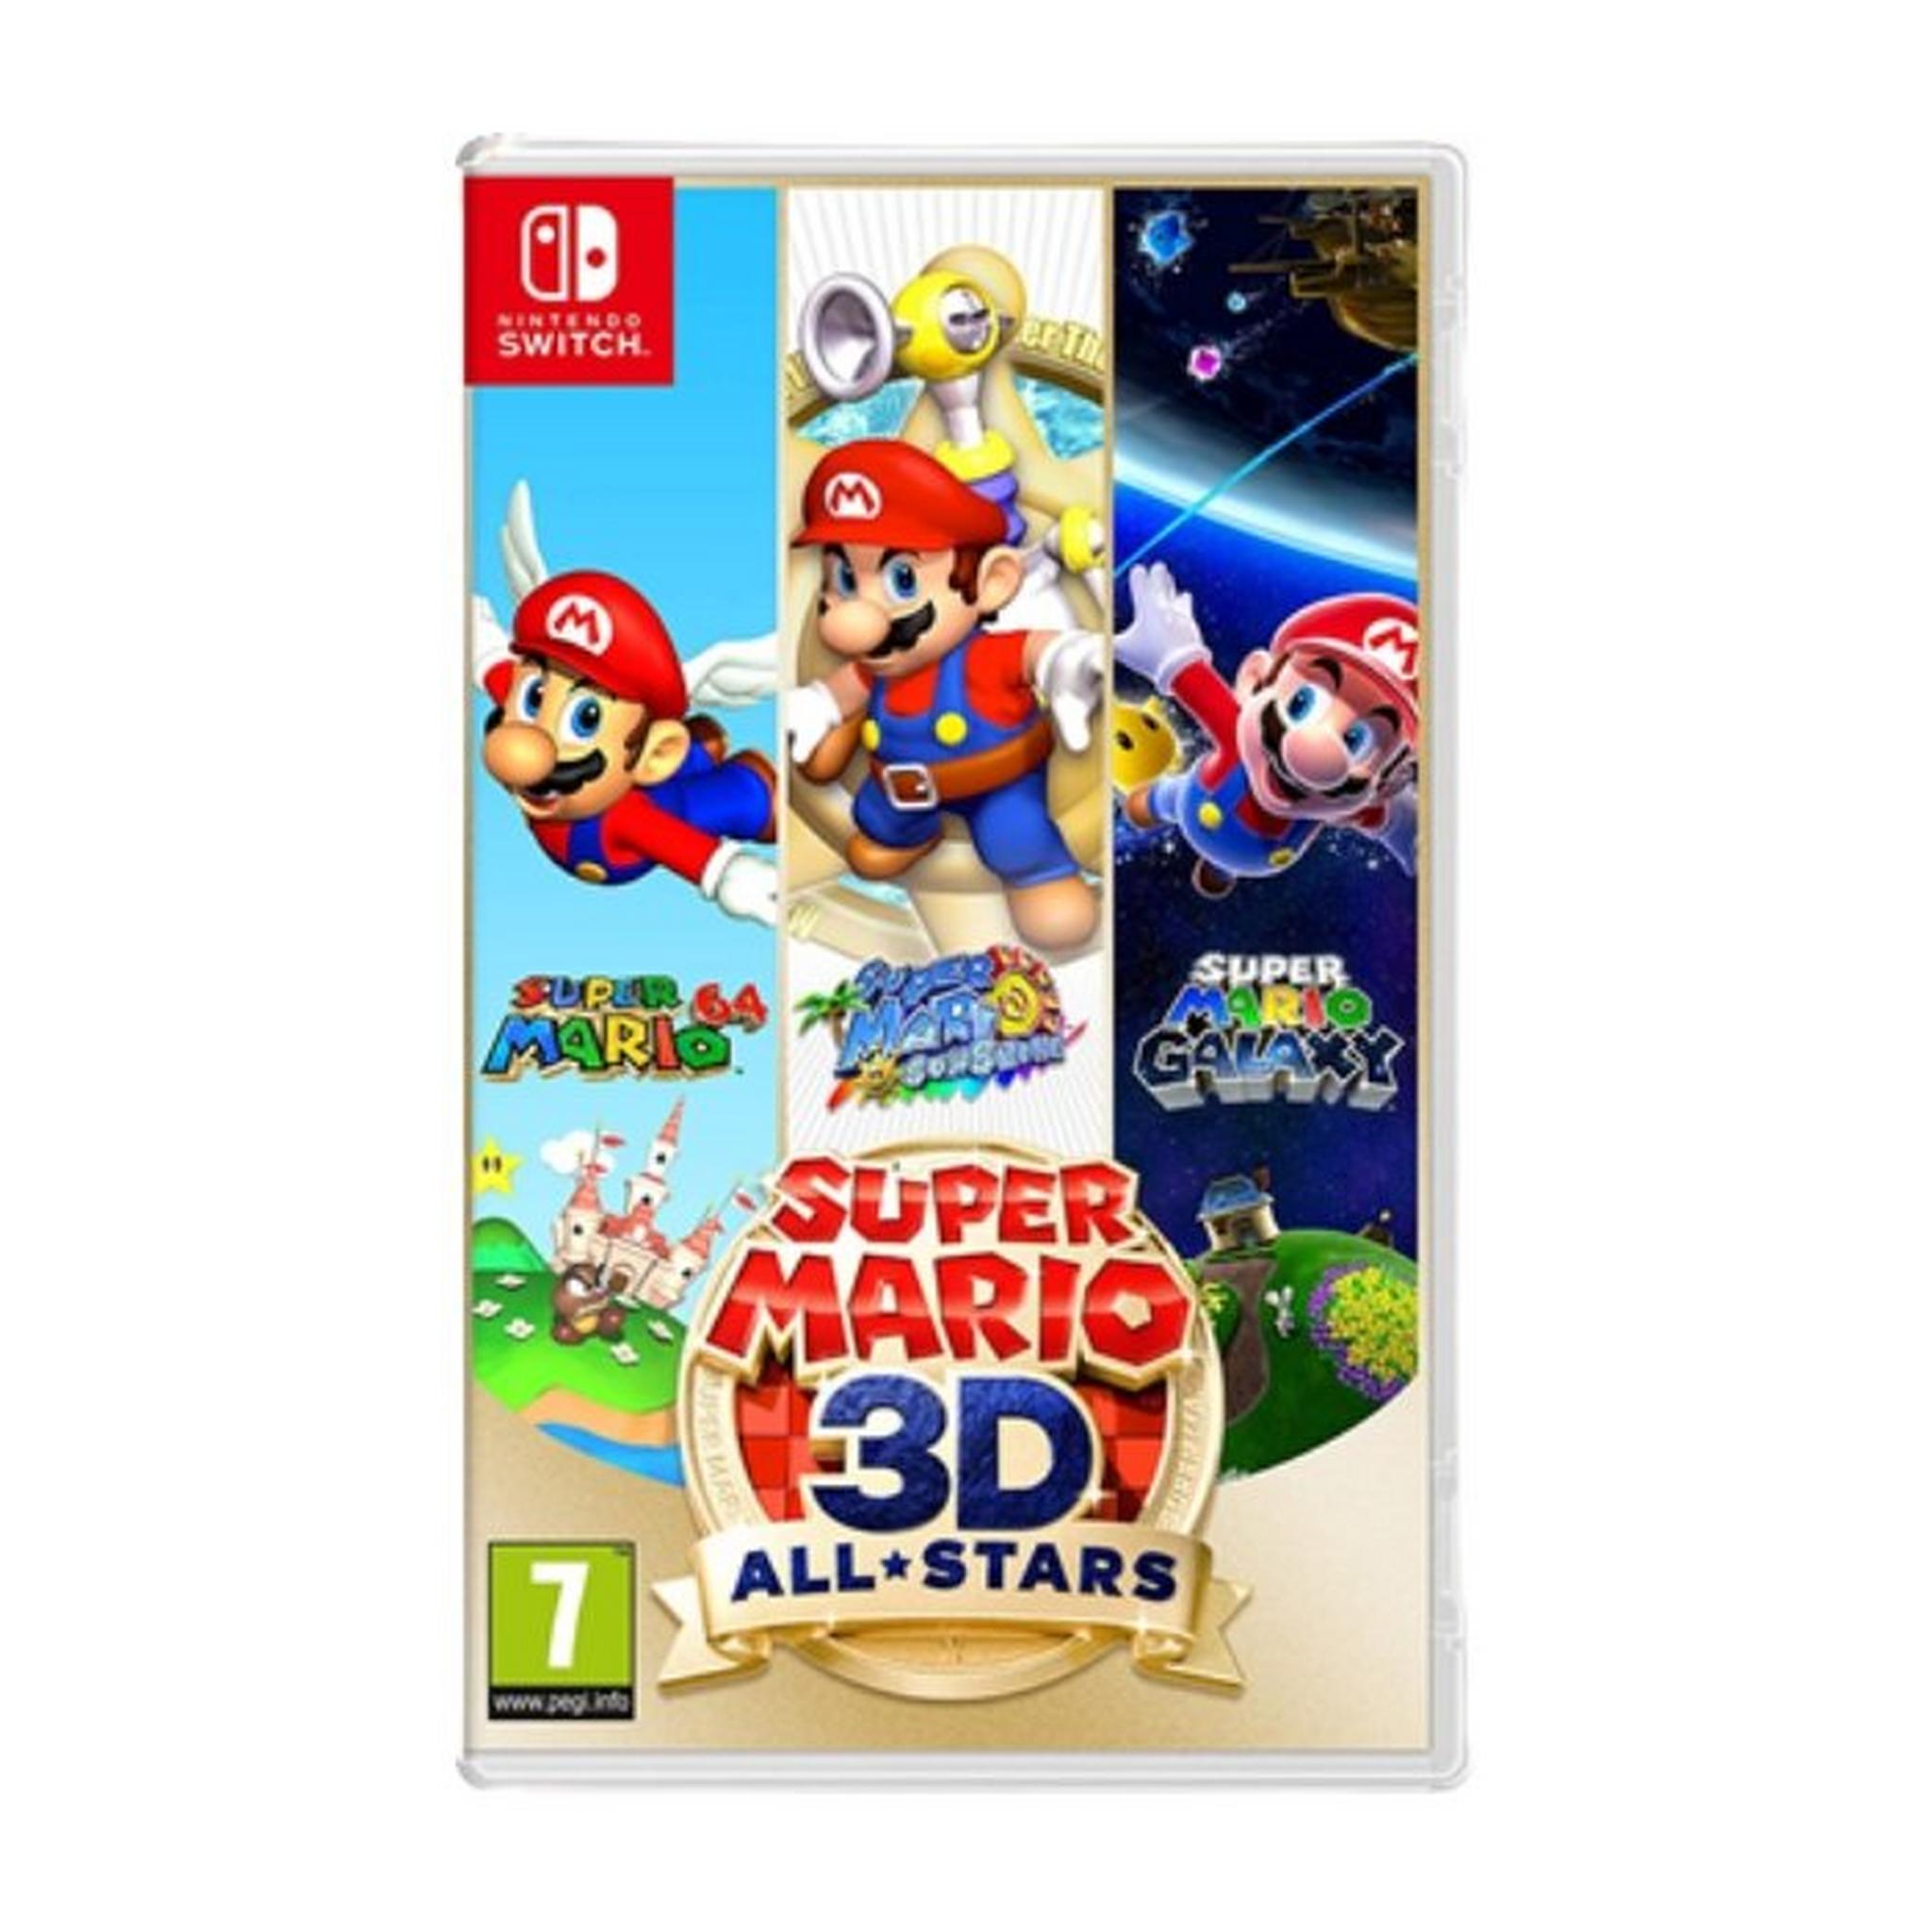 Super Mario 3D All-Stars - Nintendo Switch Game